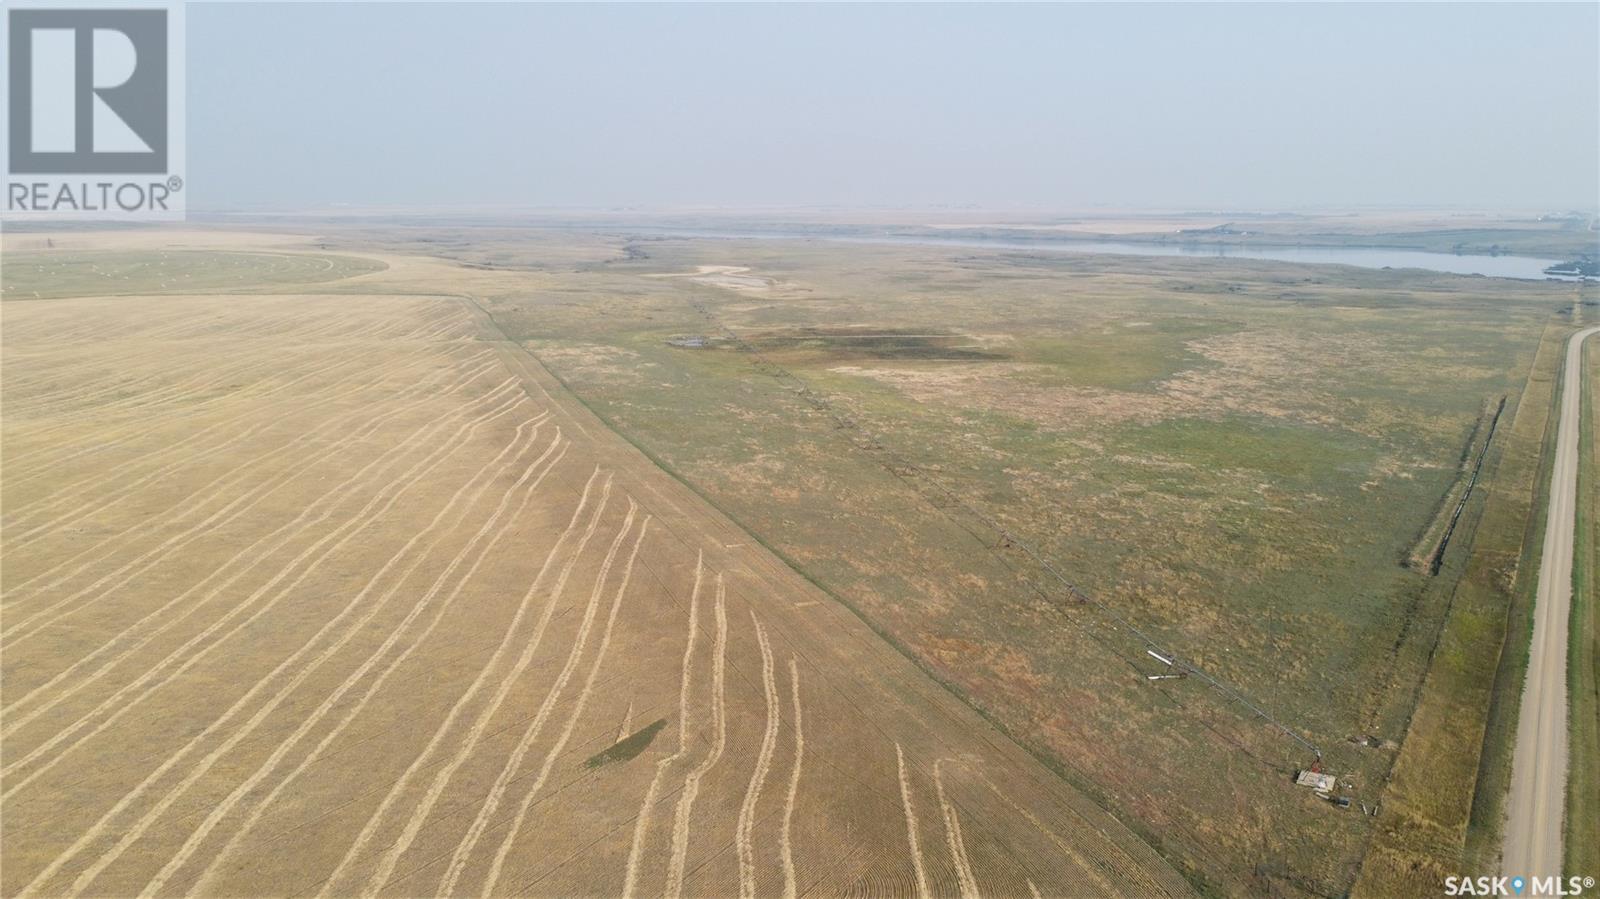 Thunder Creek Irrigated Half Section (Stewart) located in Enfield Rm No. 194, Saskatchewan